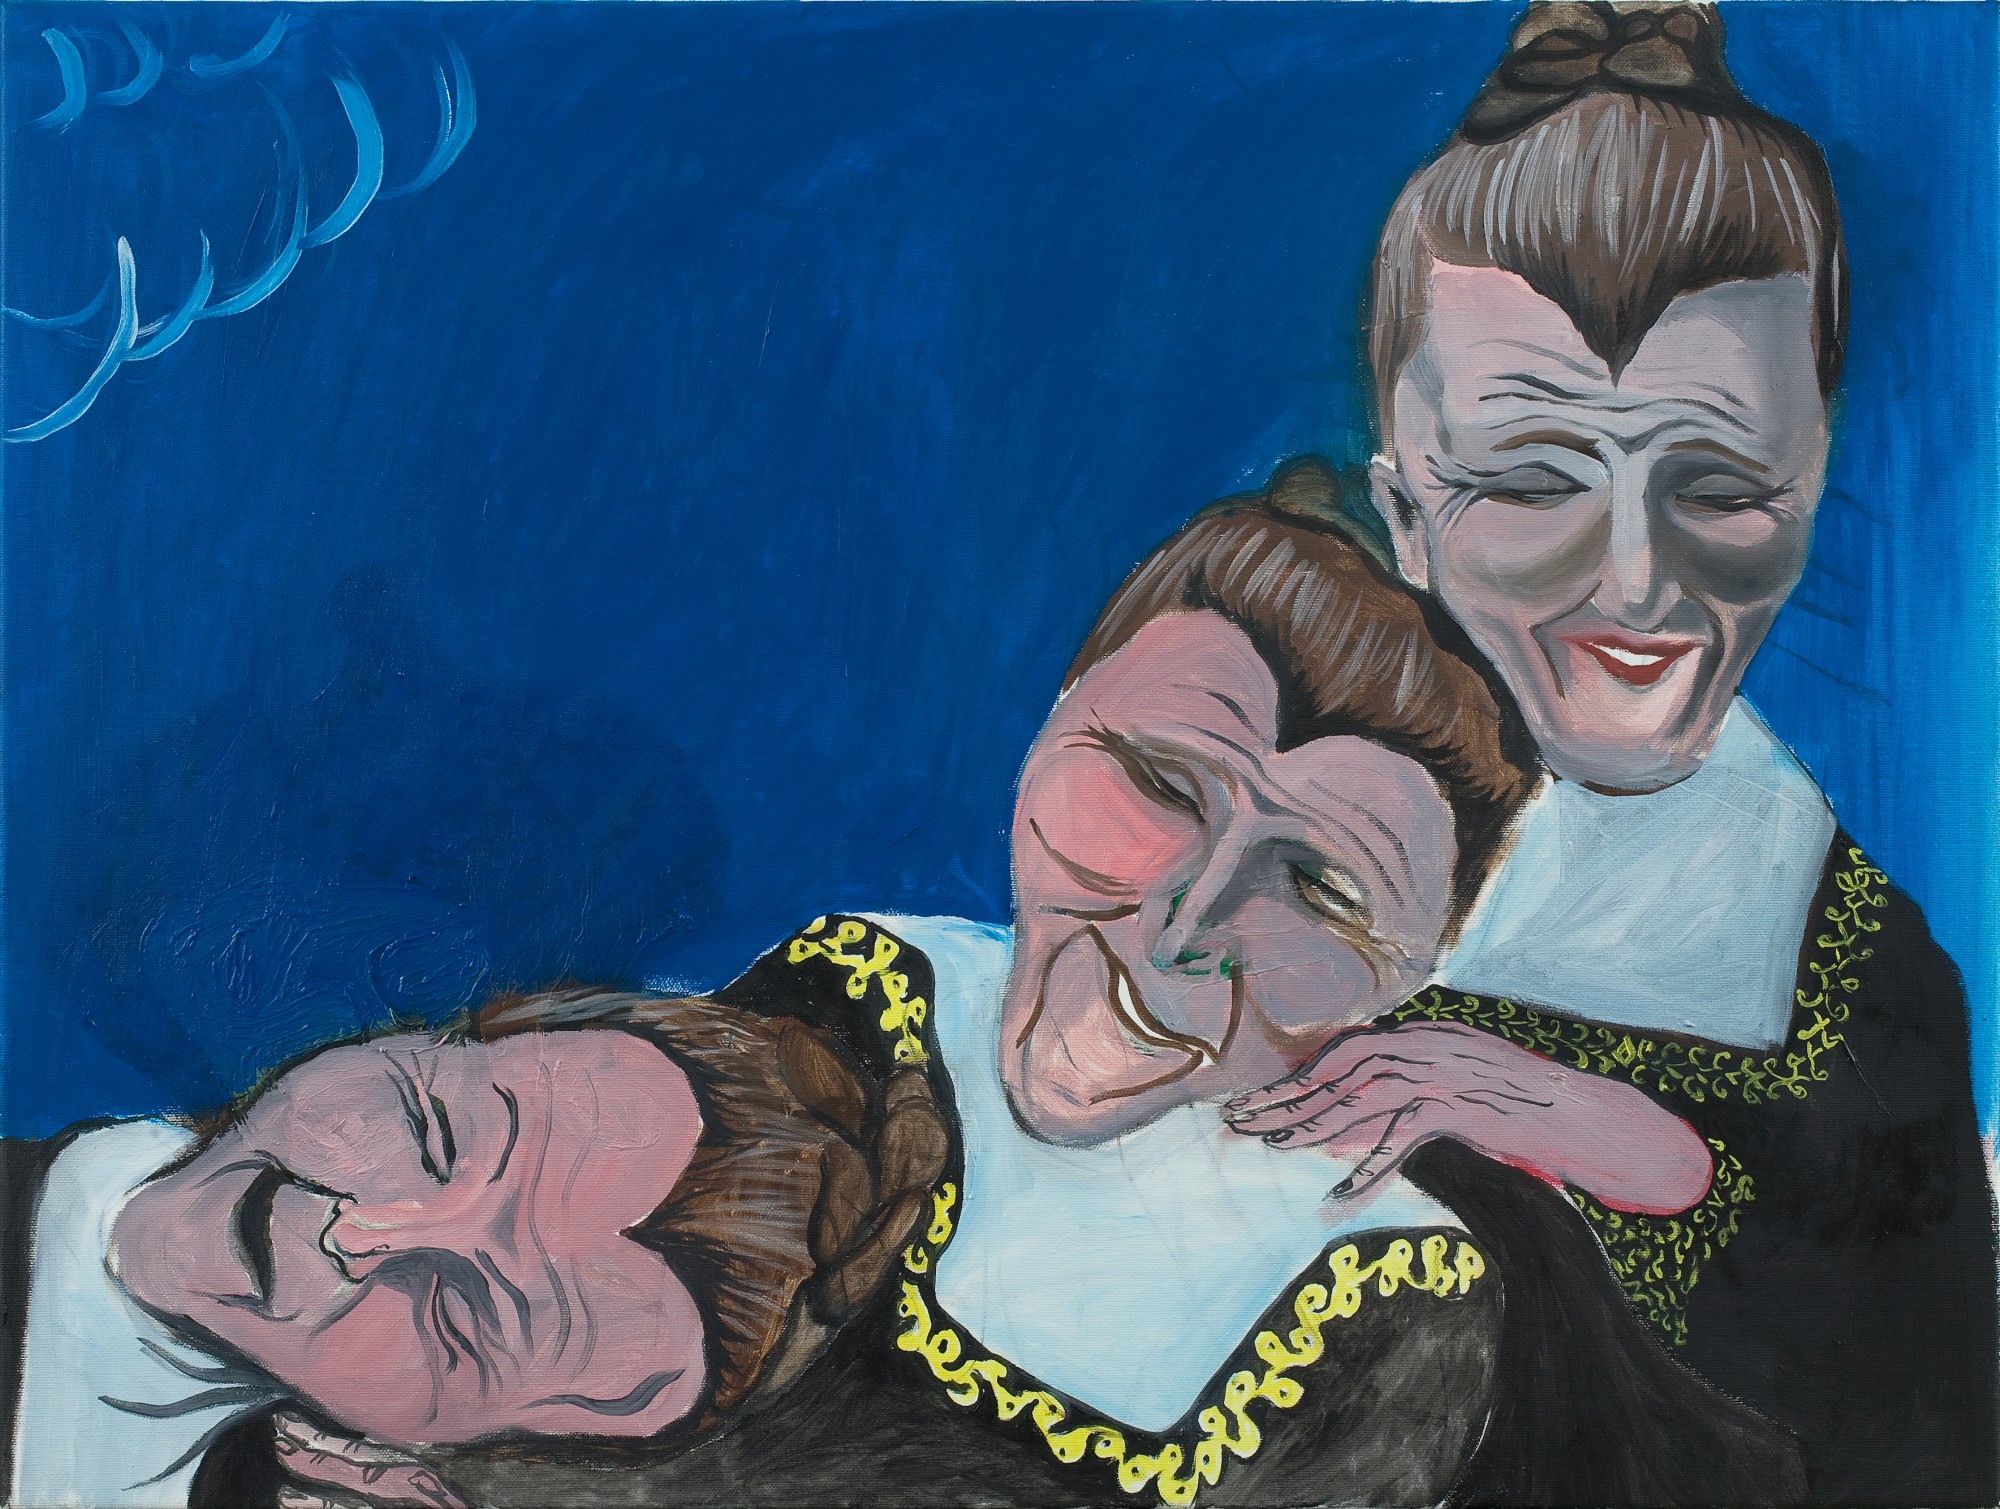 René Luckhardt, 3 old women giggling, 2008, oil on canvas, 60 x 80 cm